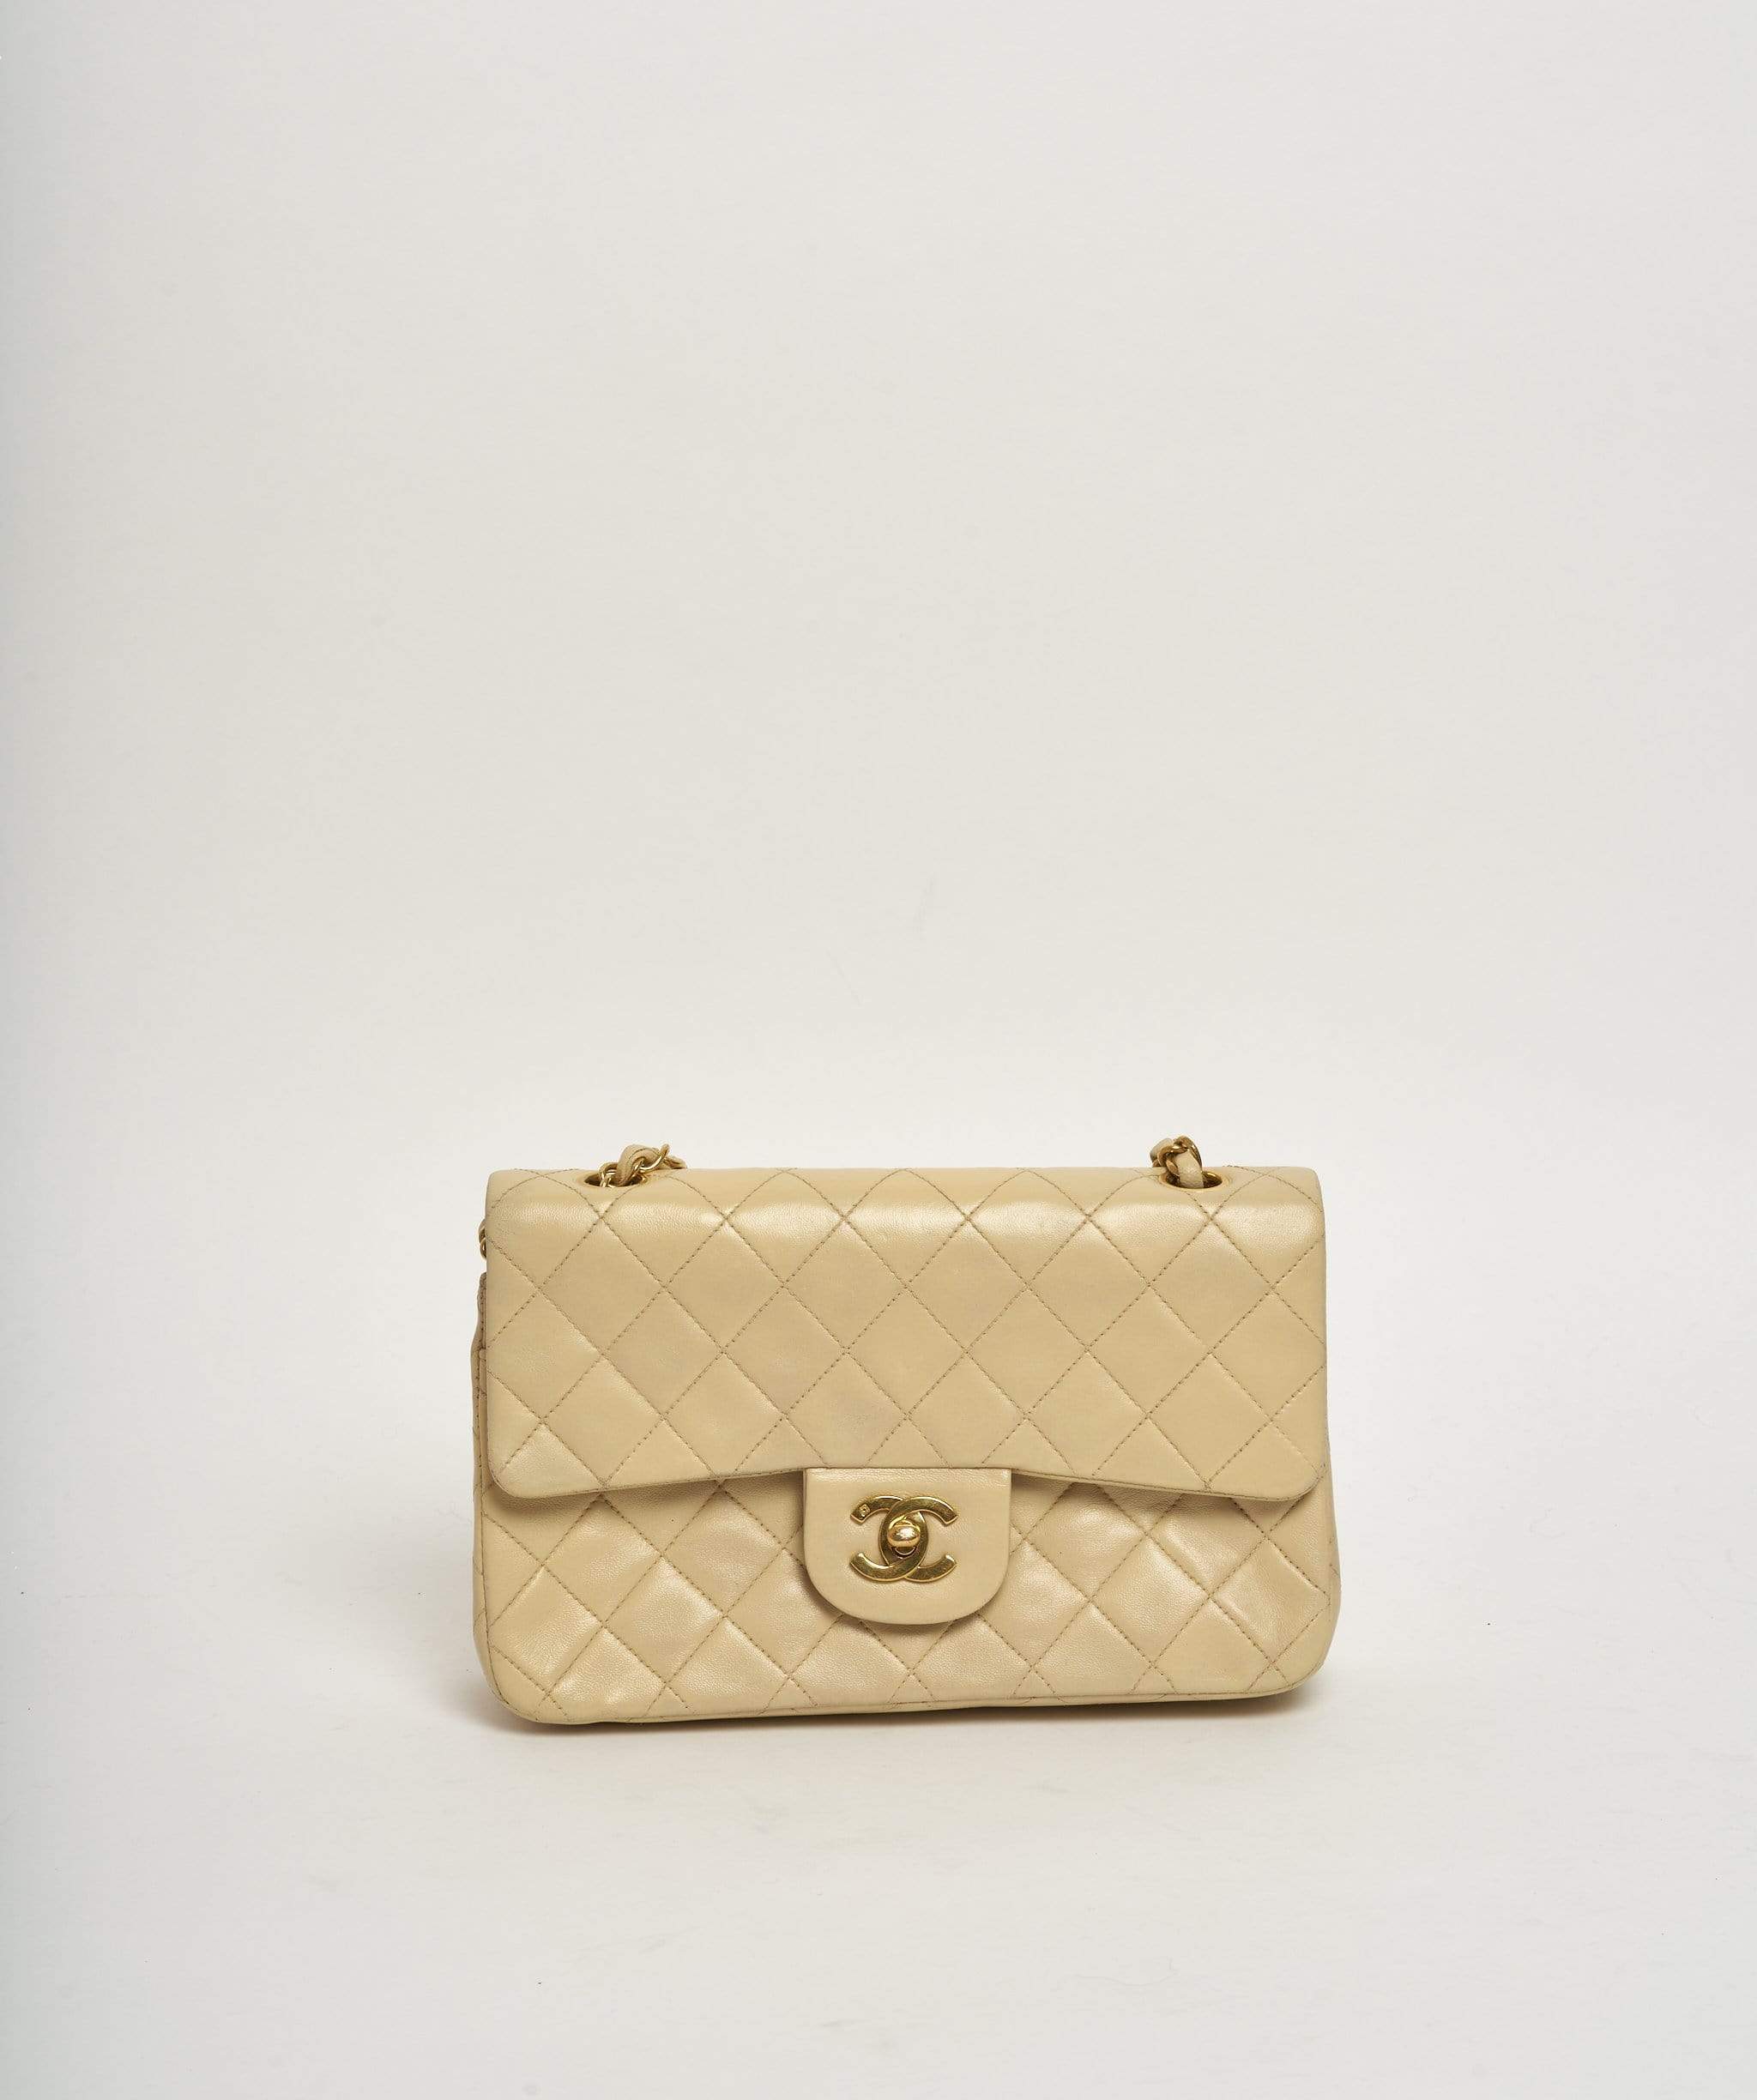 Chanel Chanel classic flap beige lambksin 9 inch